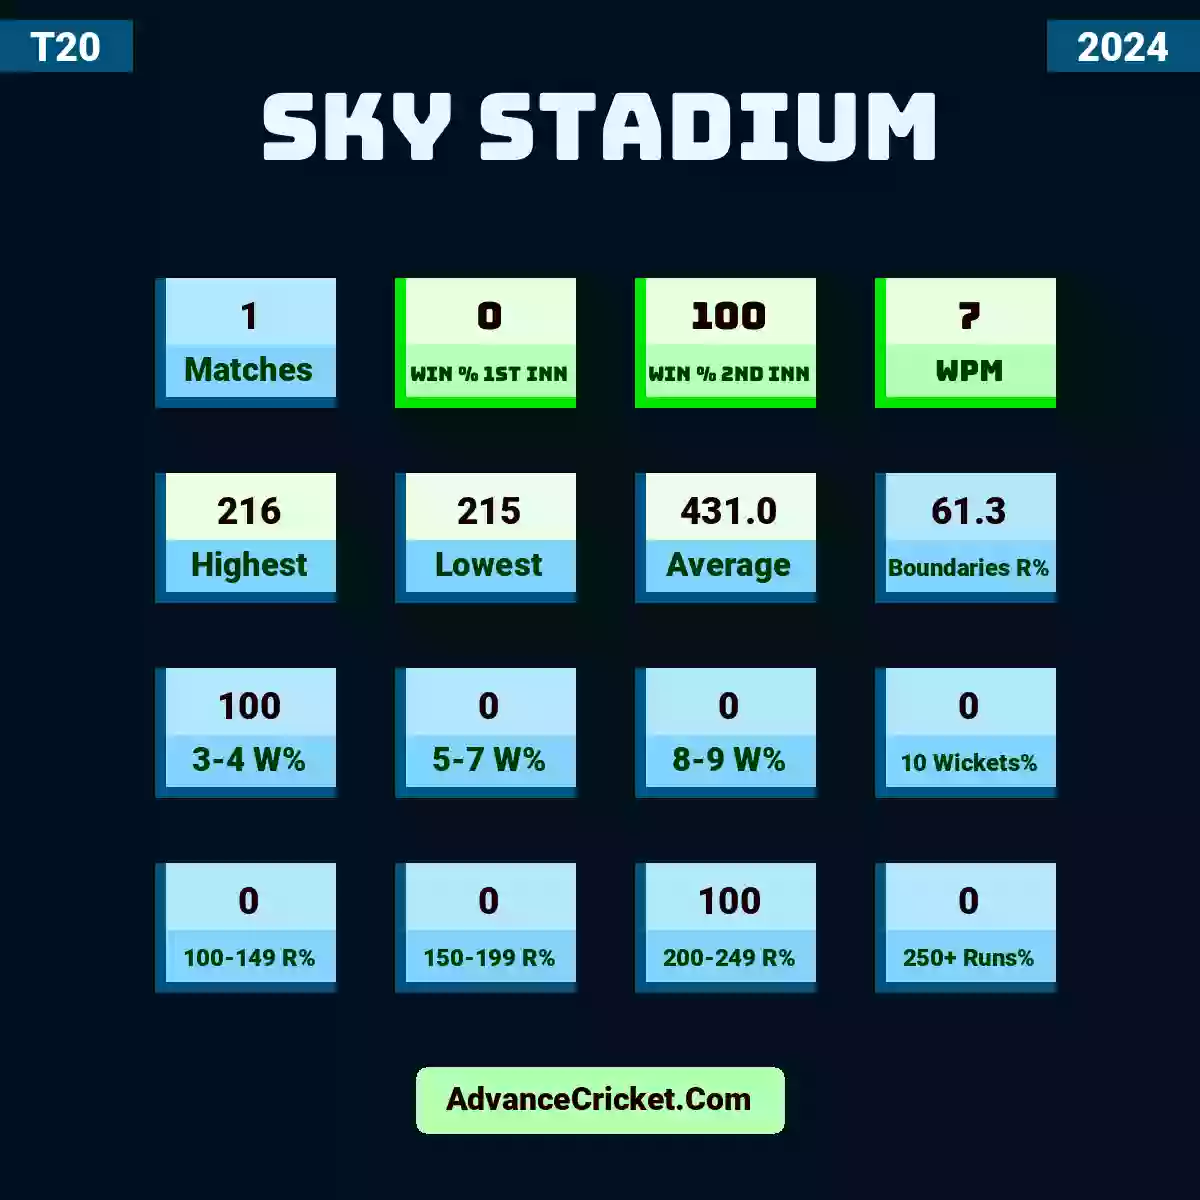 Image showing Sky Stadium with Matches: 1, Win % 1st Inn: 0, Win % 2nd Inn: 100, WPM: 7, Highest: 216, Lowest: 215, Average: 431.0, Boundaries R%: 61.3, 3-4 W%: 100, 5-7 W%: 0, 8-9 W%: 0, 10 Wickets%: 0, 100-149 R%: 0, 150-199 R%: 0, 200-249 R%: 100, 250+ Runs%: 0.